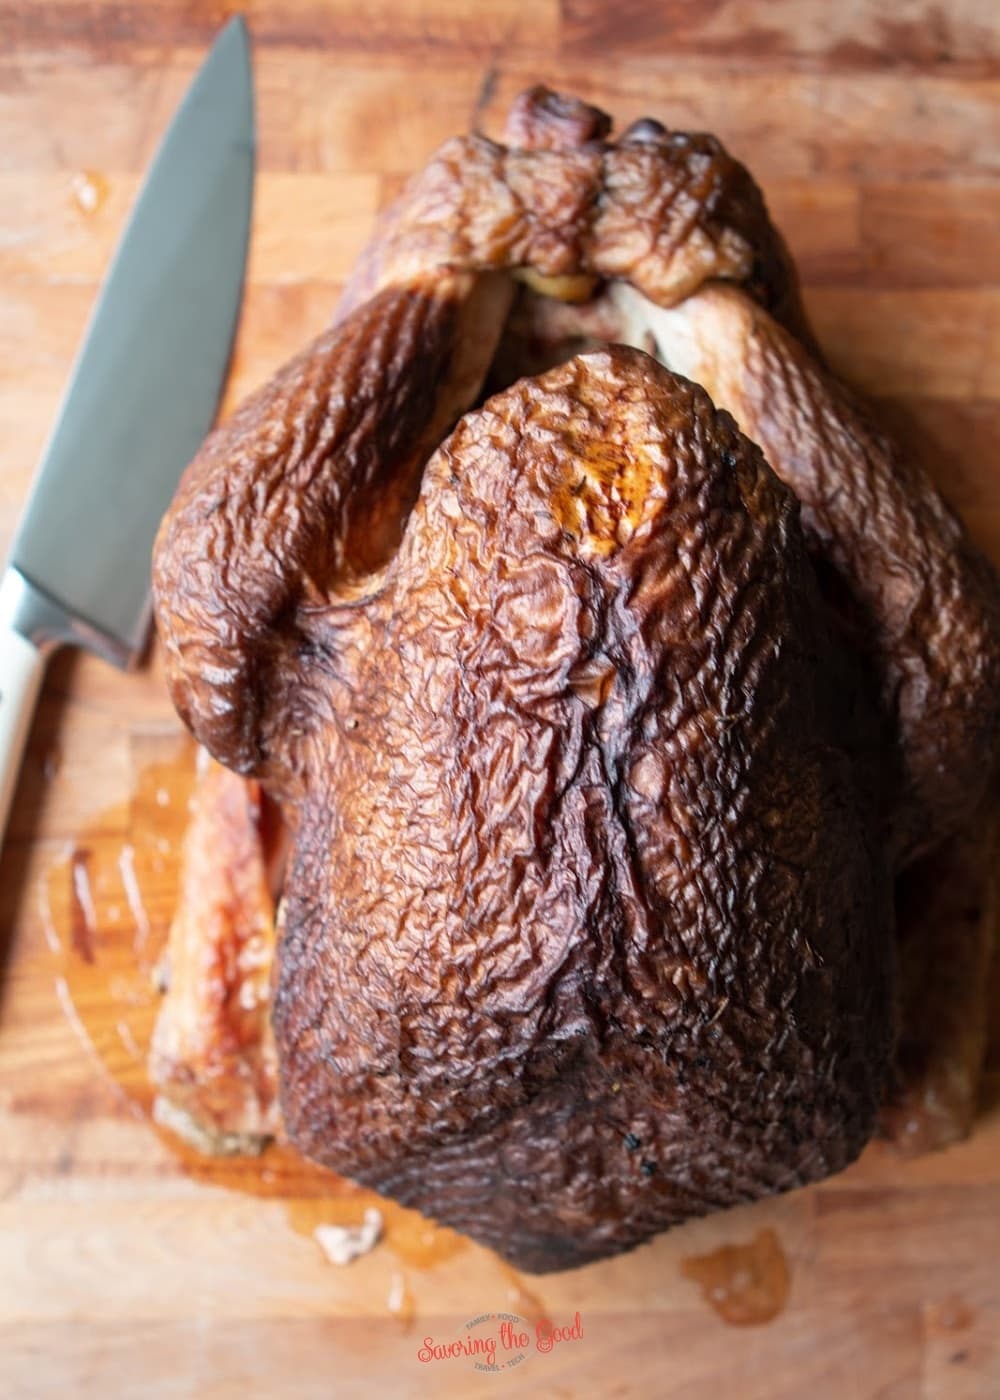 Whole smoked turkey on a cutting board